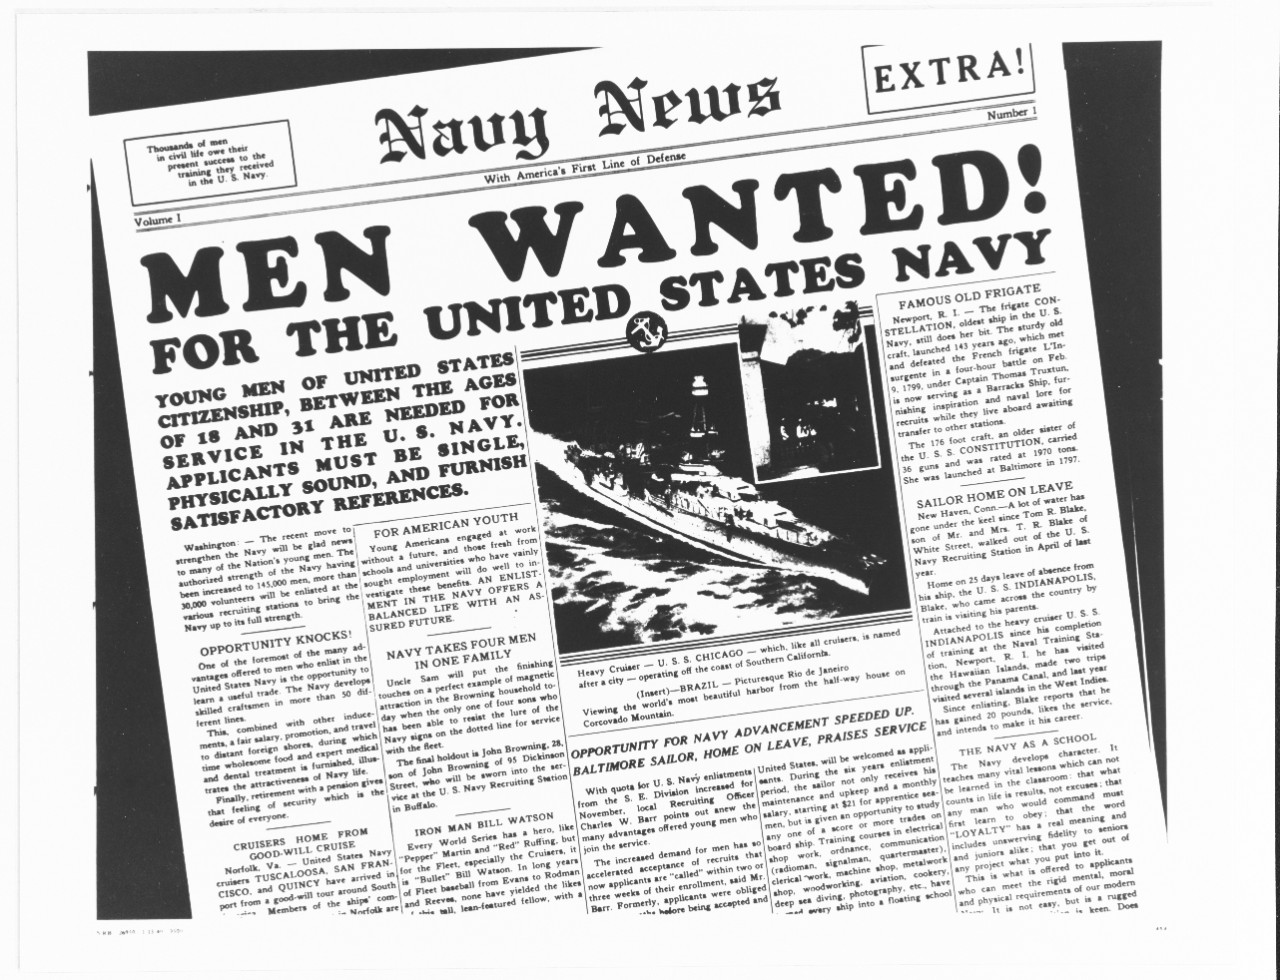 Navy poster, "Navy News:  Men Wanted!"